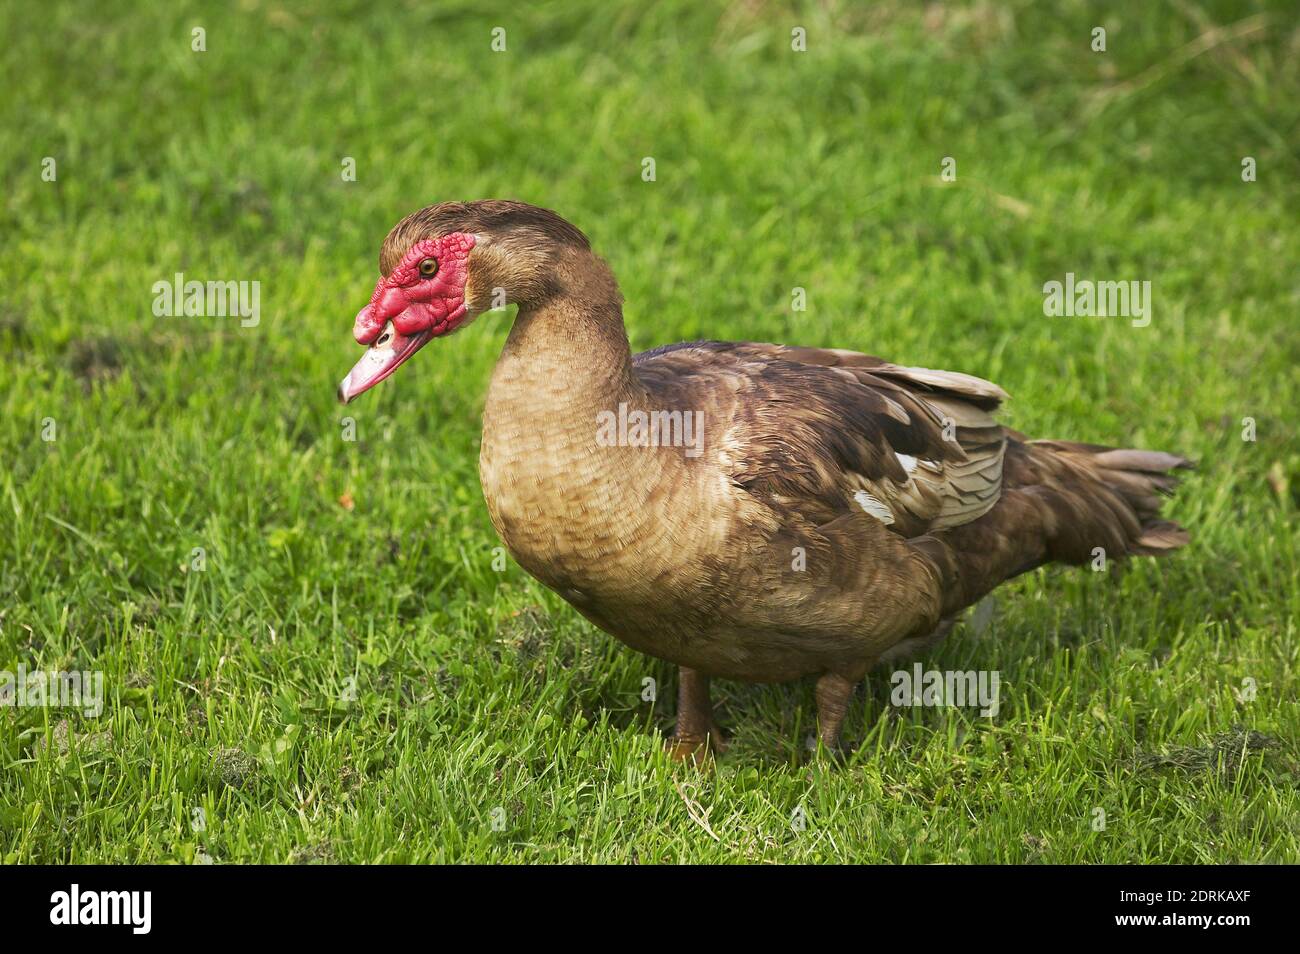 Muskovy Duck, cairina moschata Stock Photo